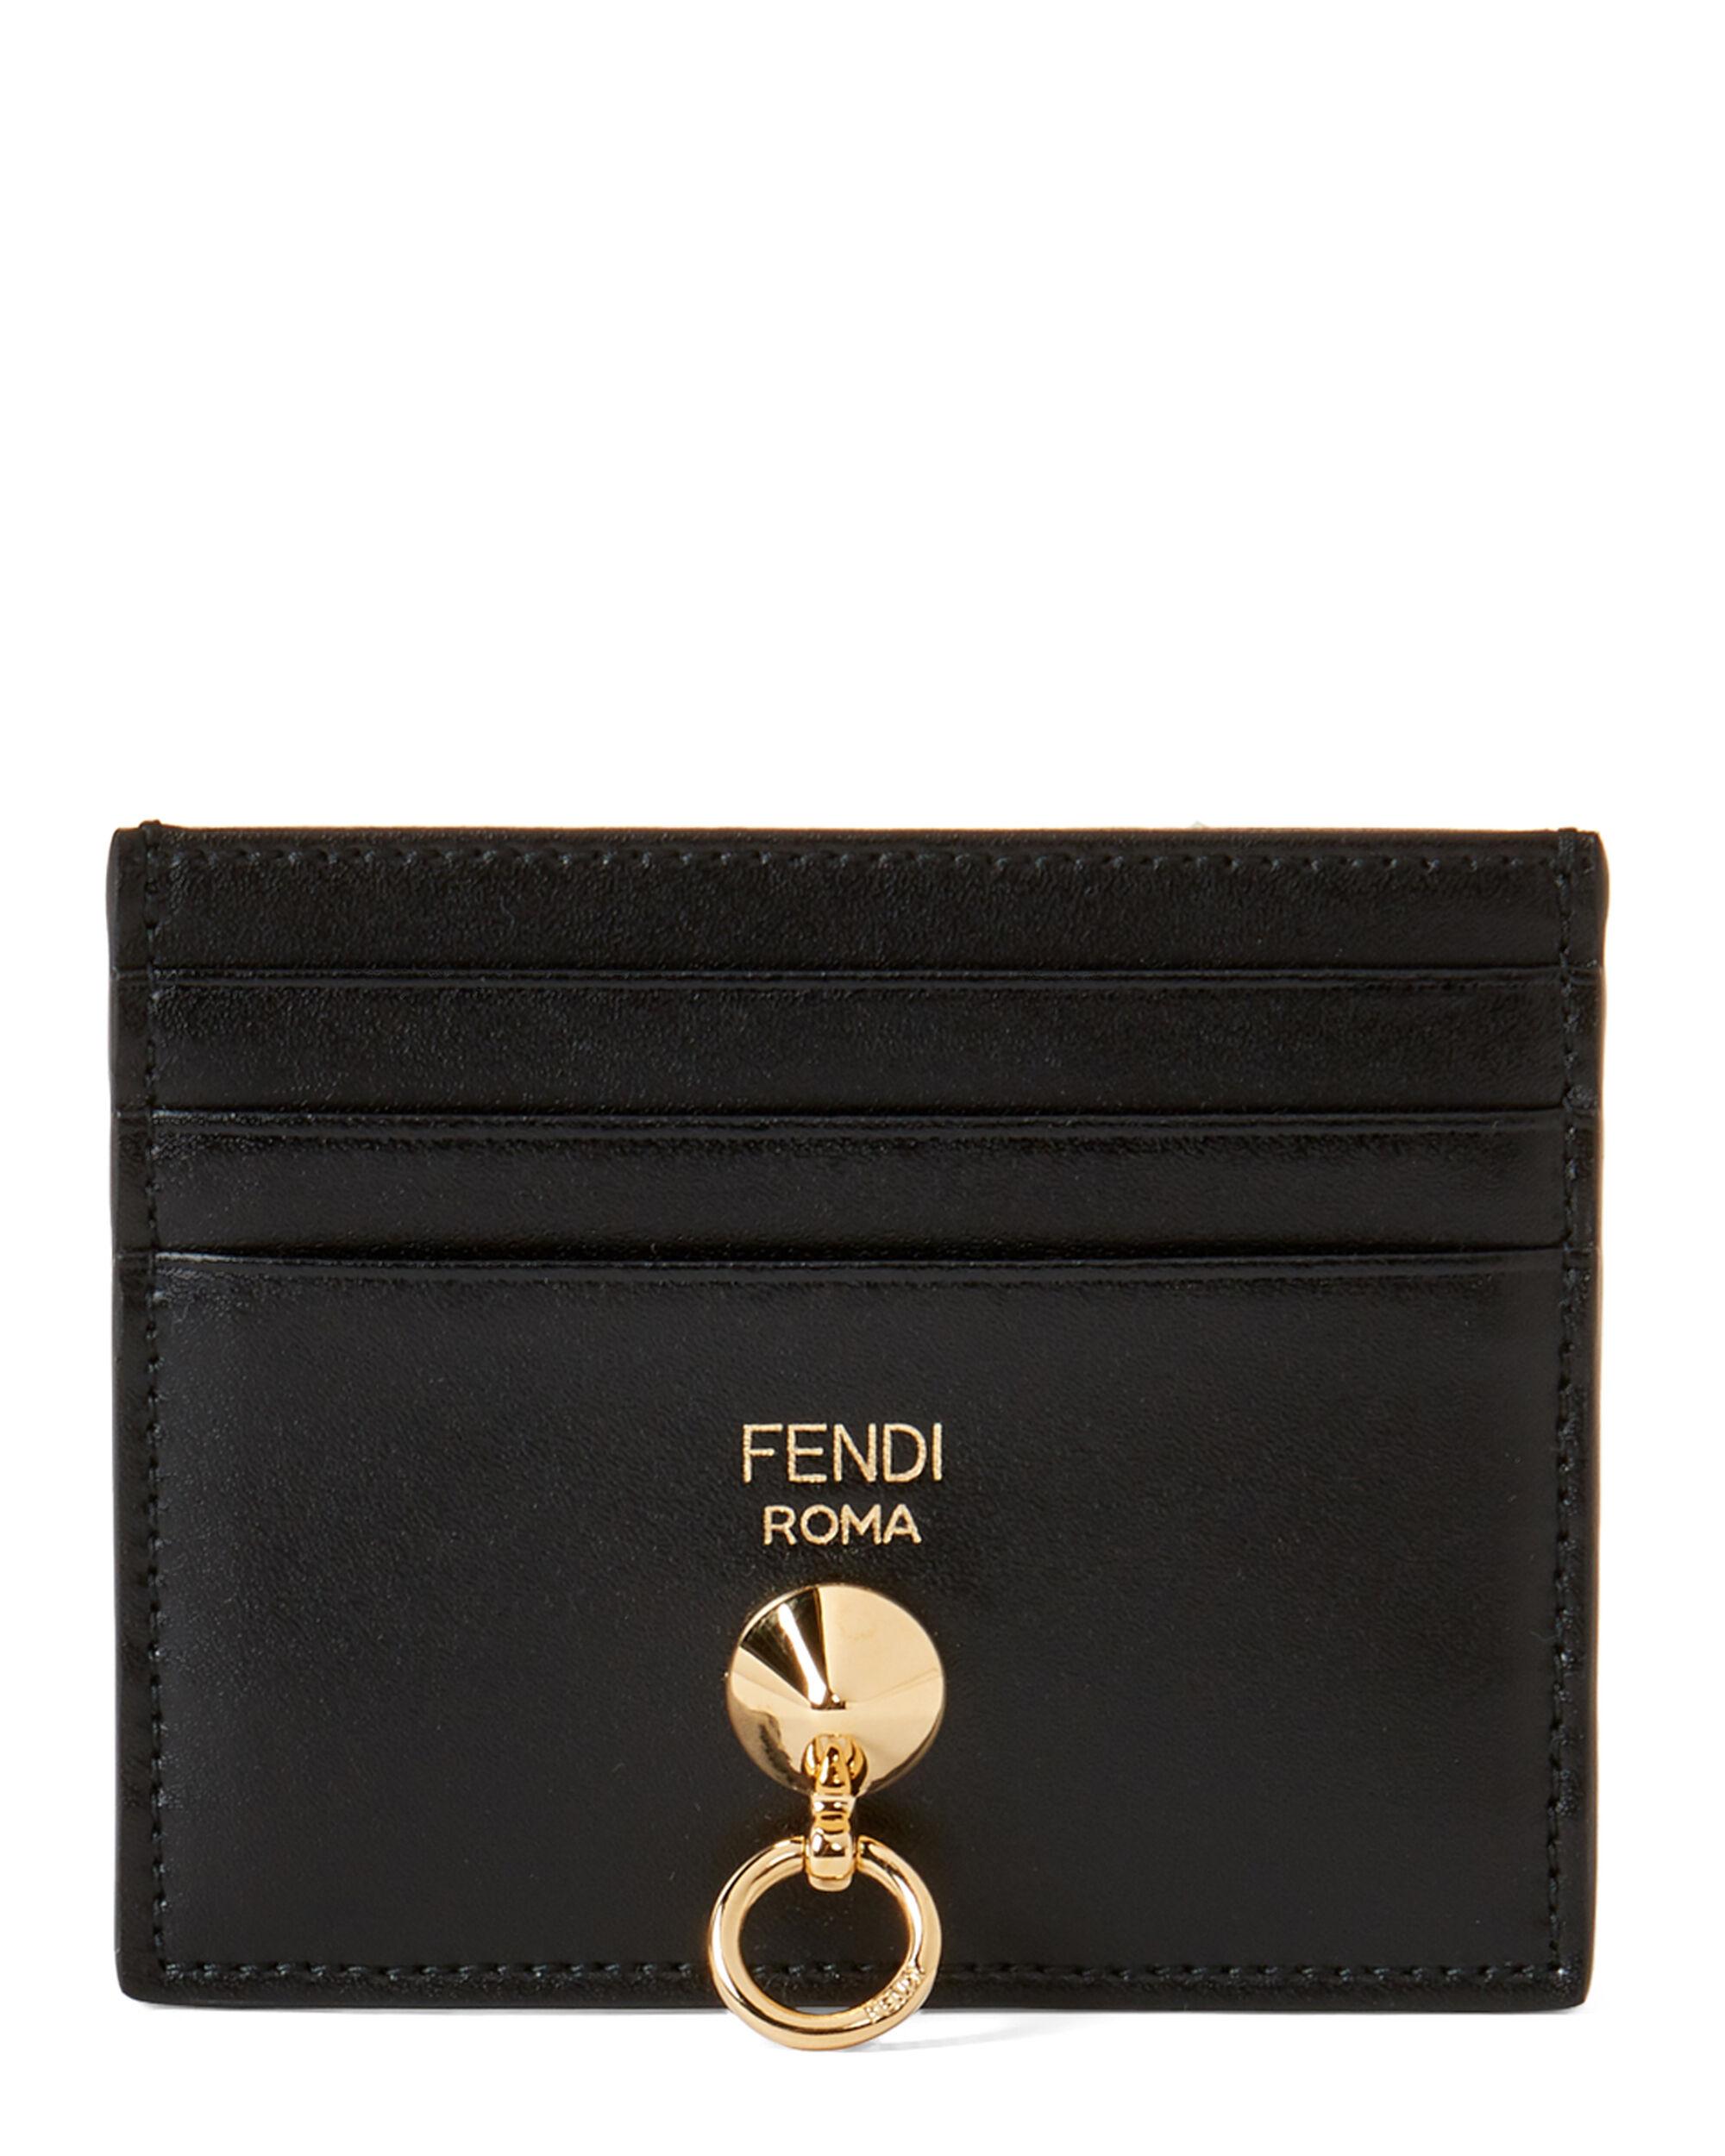 Fendi Black Leather Card Case - Lyst